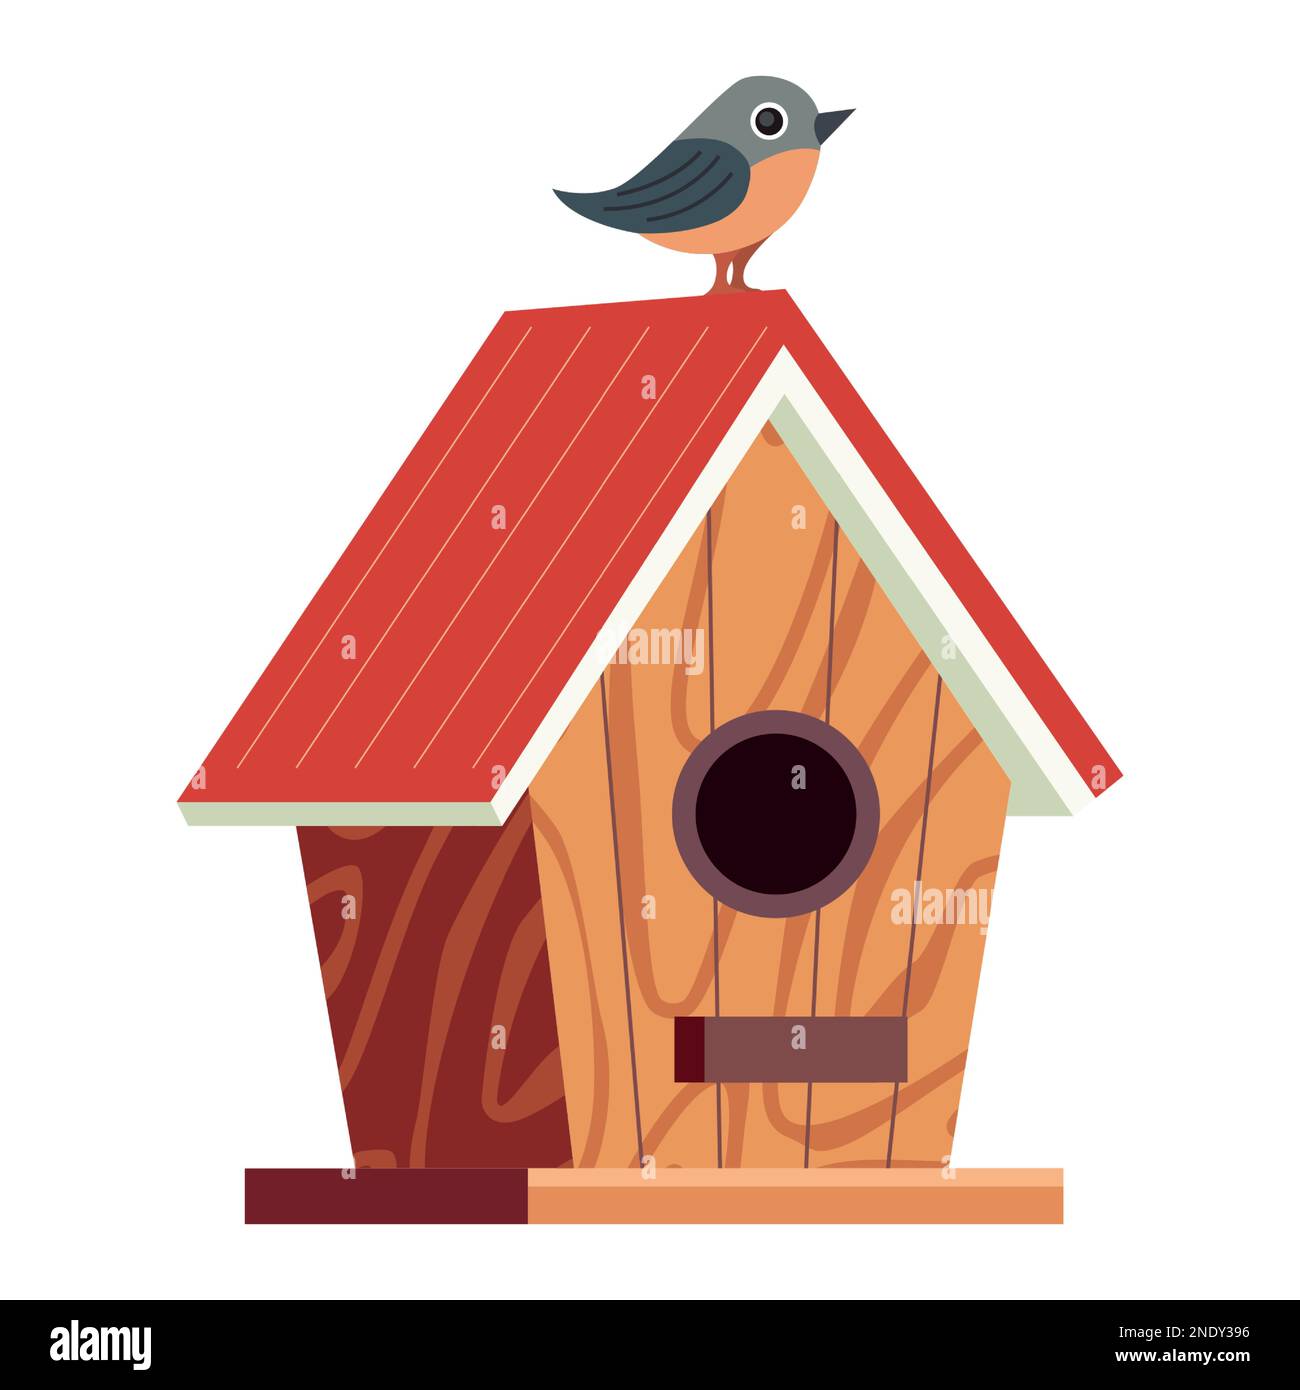 wooden birdhouse for birds. house for animals. flat vector illustration. Stock Vector